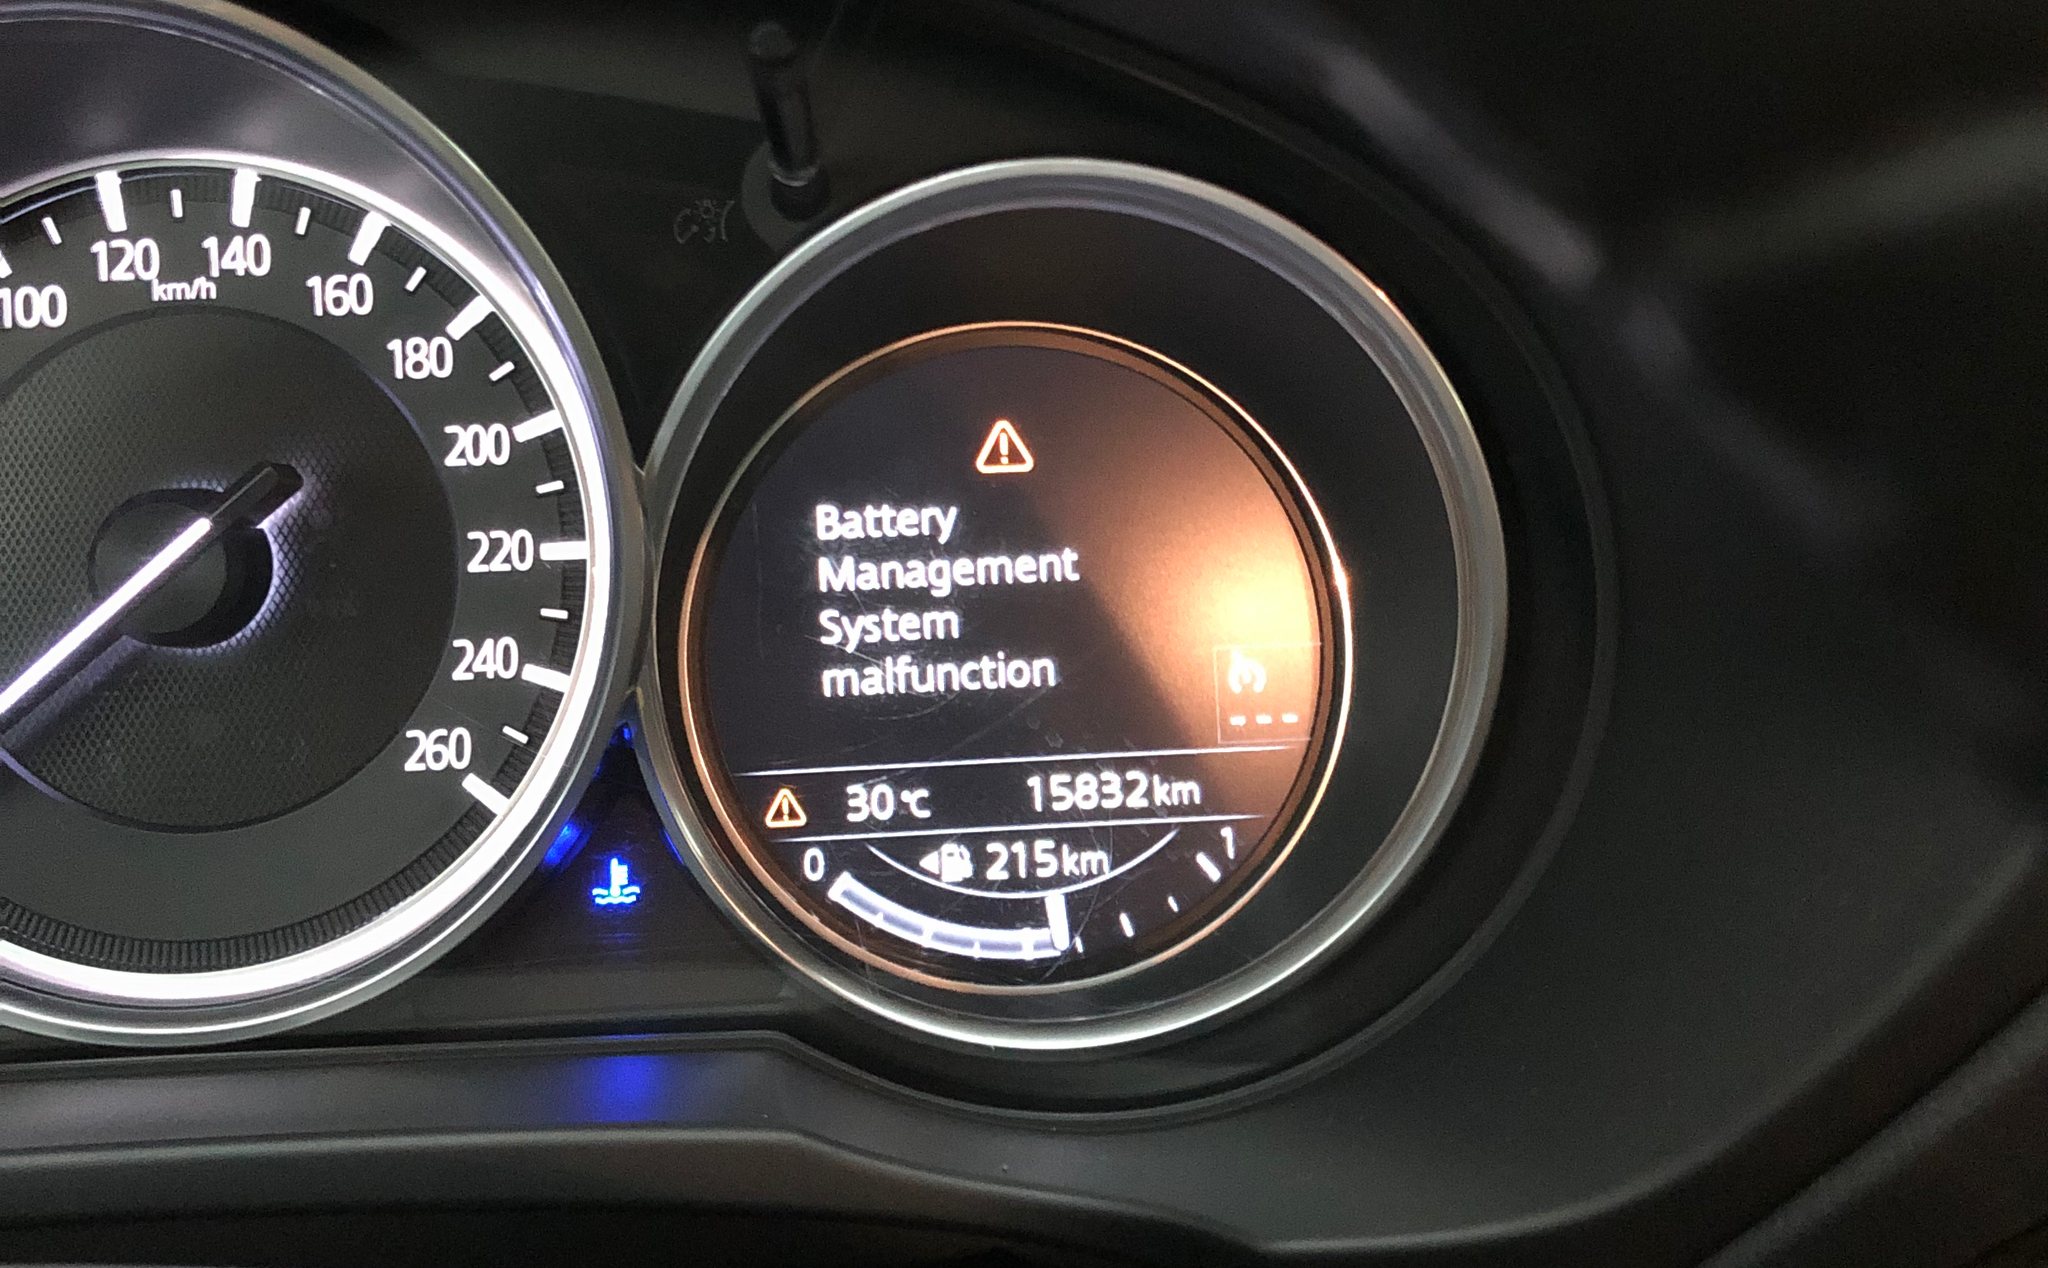 Lỗi "Battery Management System malfunction" trên xe Mazda và cách khắc phục